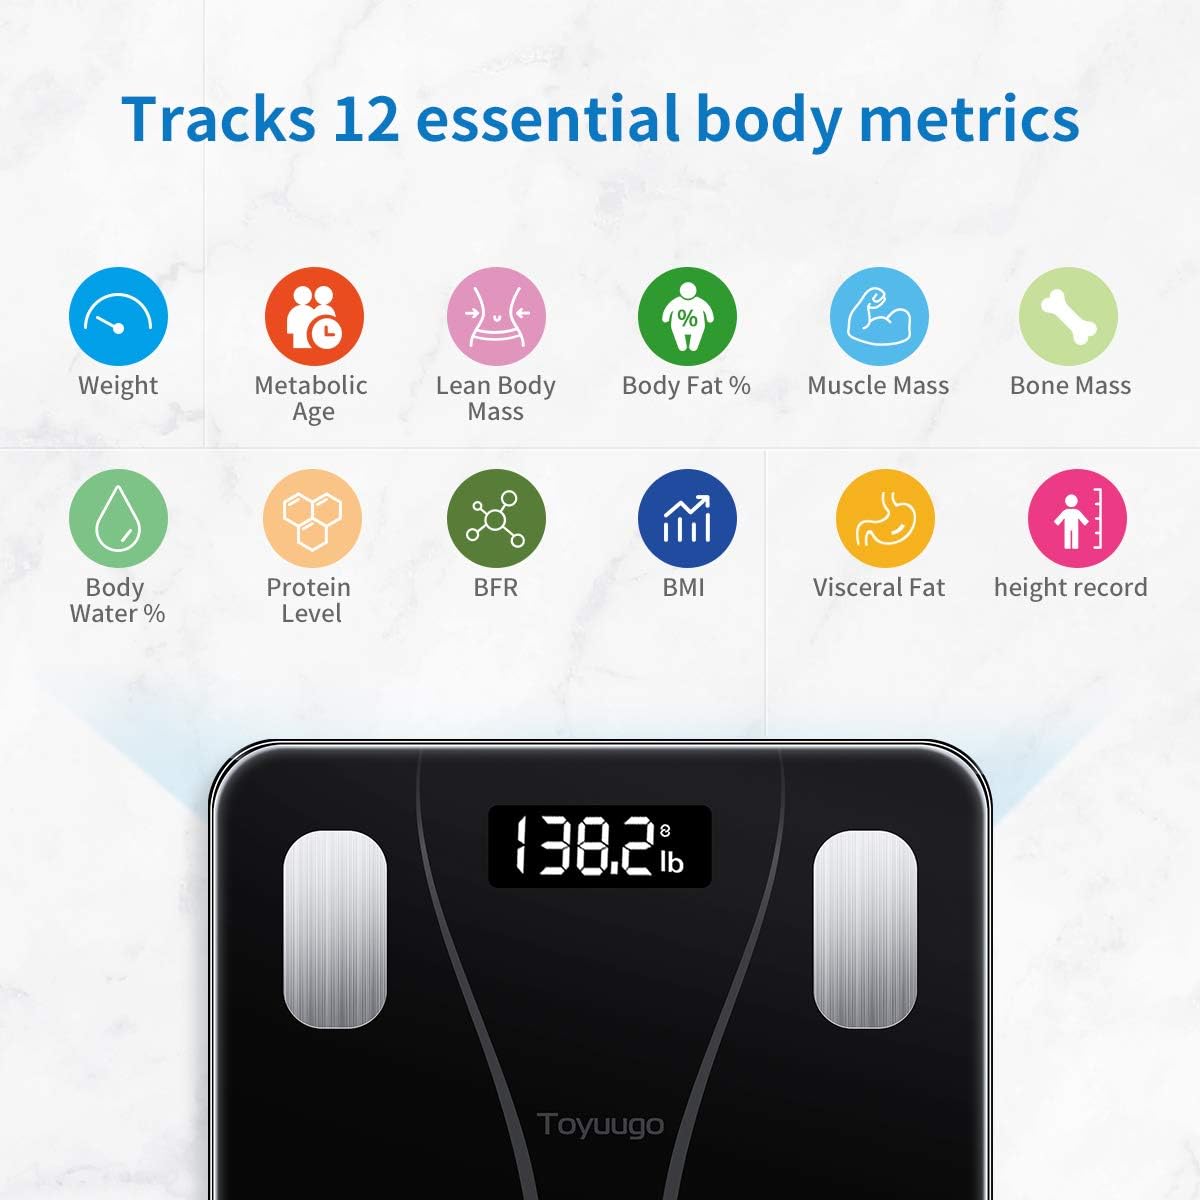 Generic Toyuugo Bluetooth Body Fat Scale, Smart Wireless BMI Bathroom  Weight Scale Body Composition Monitor Health